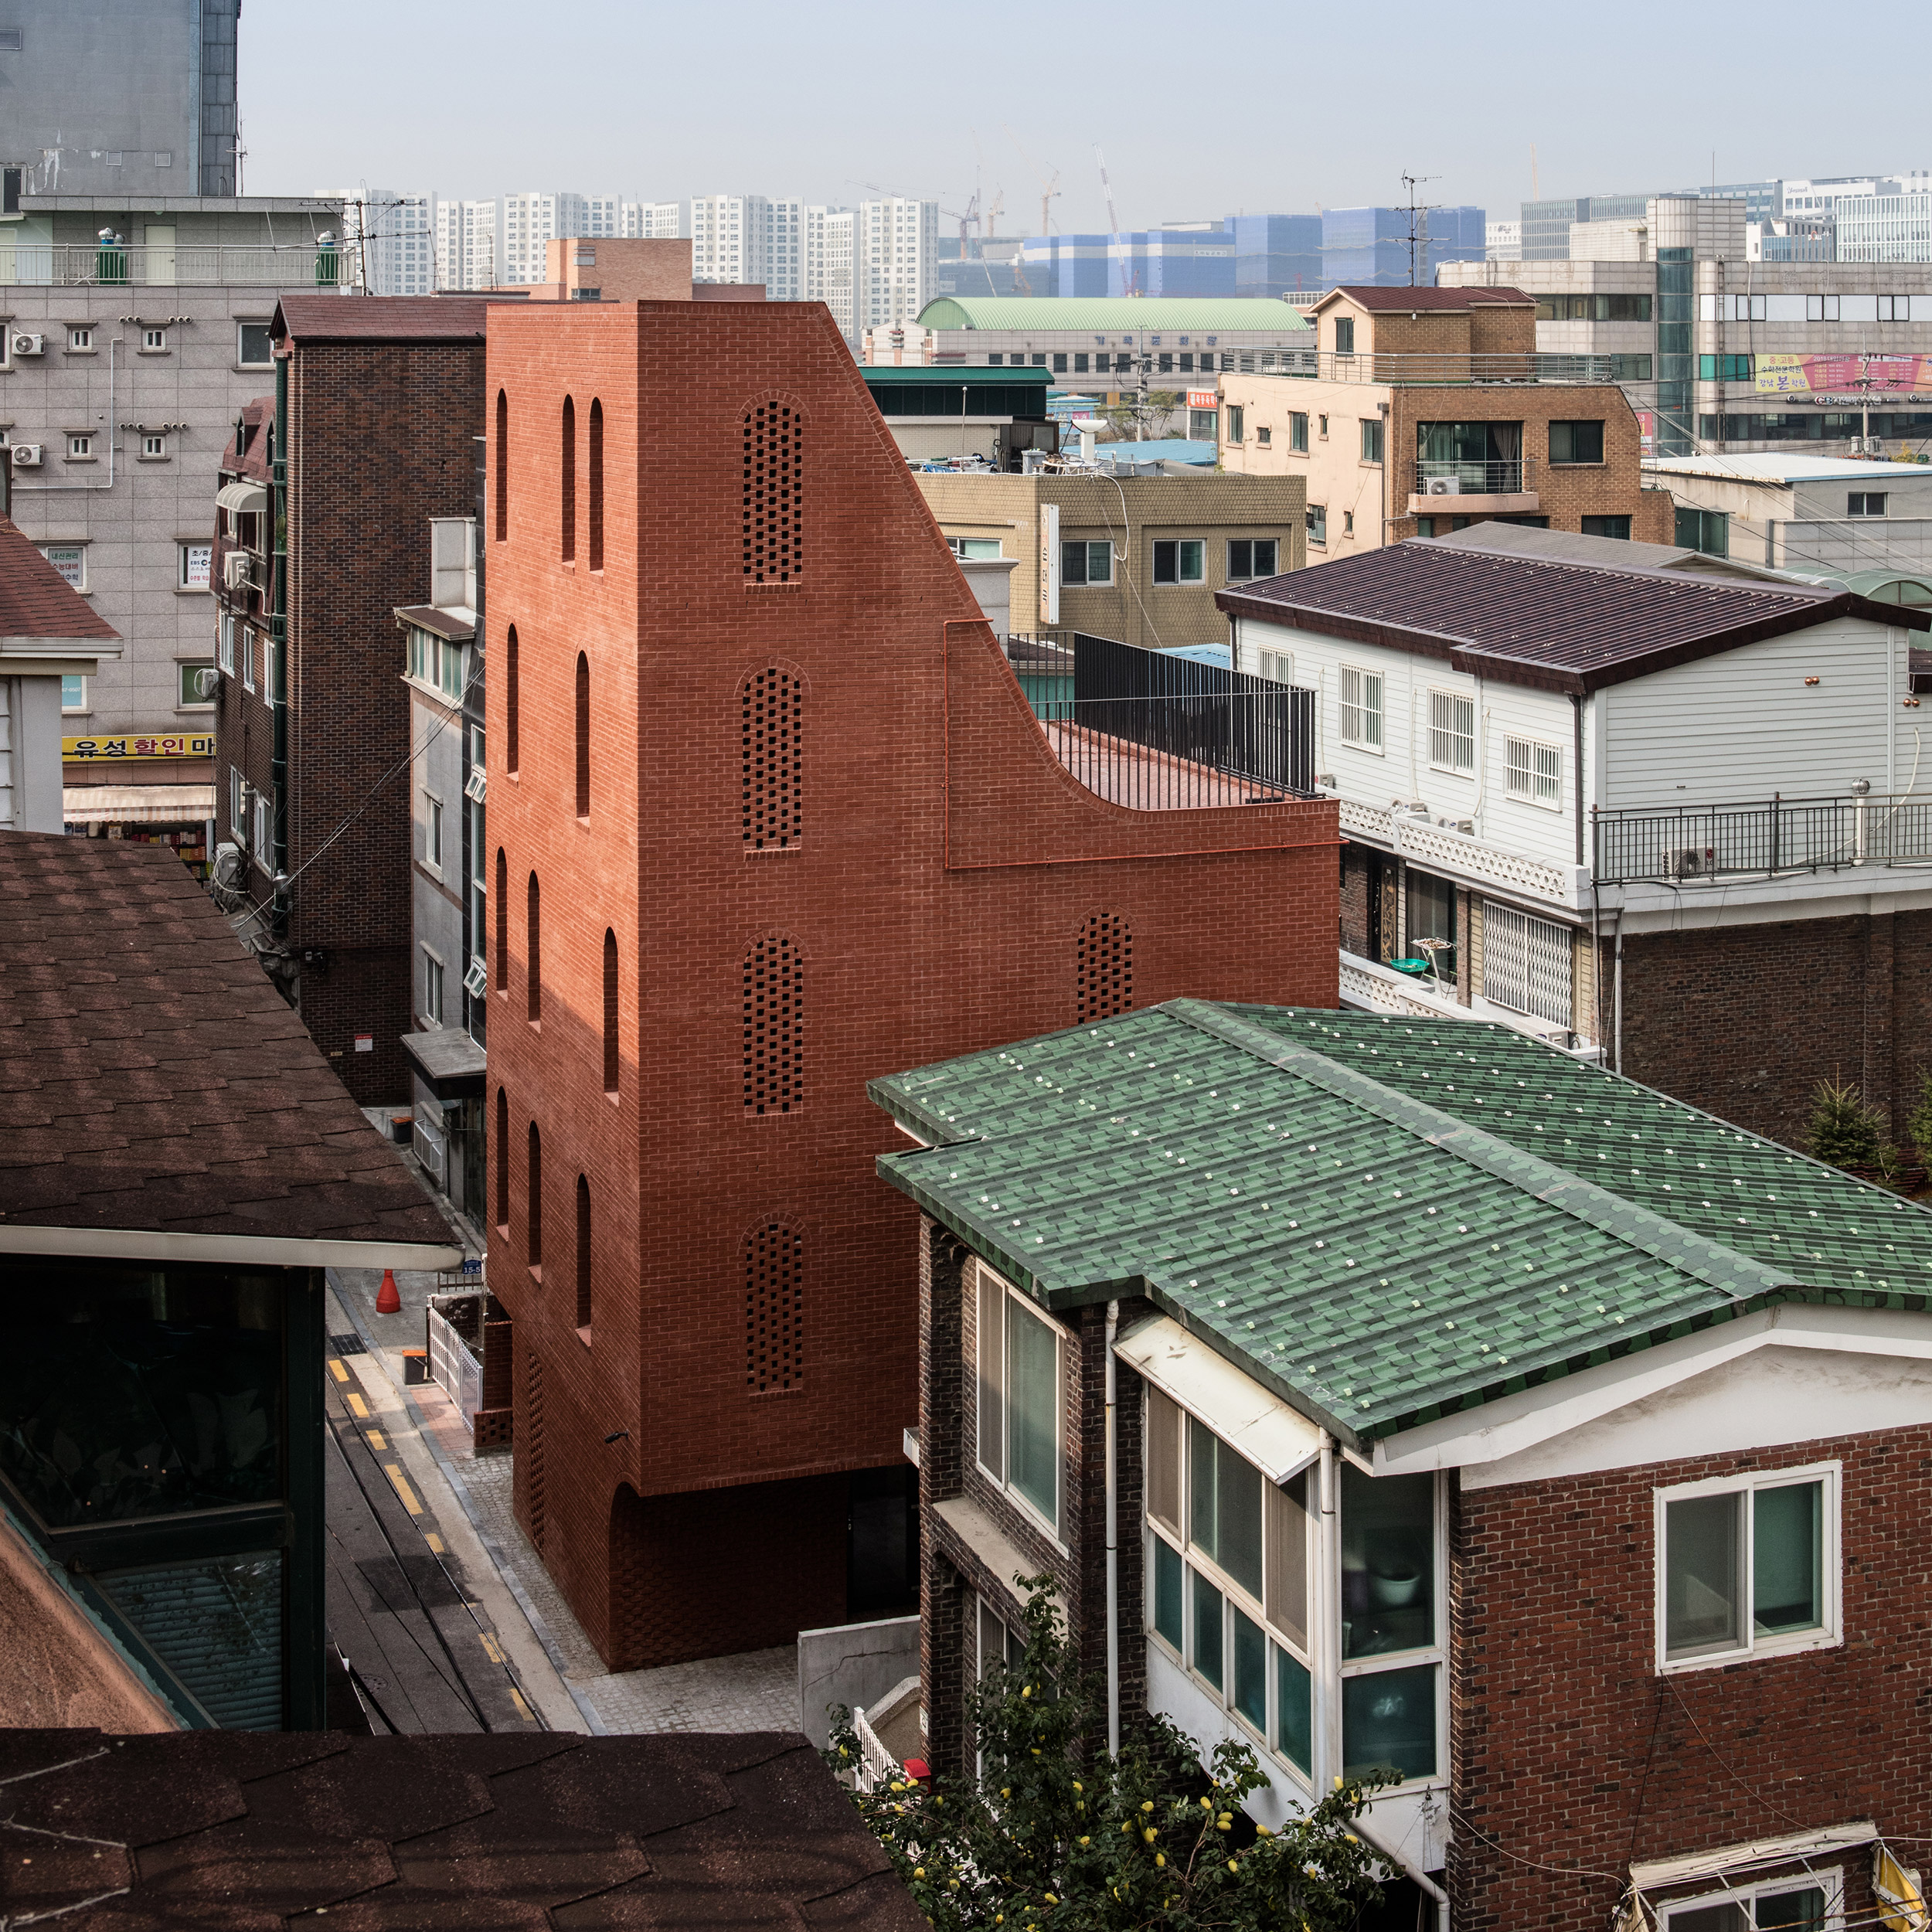 Architecture Honor Award: Five-Story House by stpmj Architecture, in Seoul, South Korea. Photo: Bae Jihun.